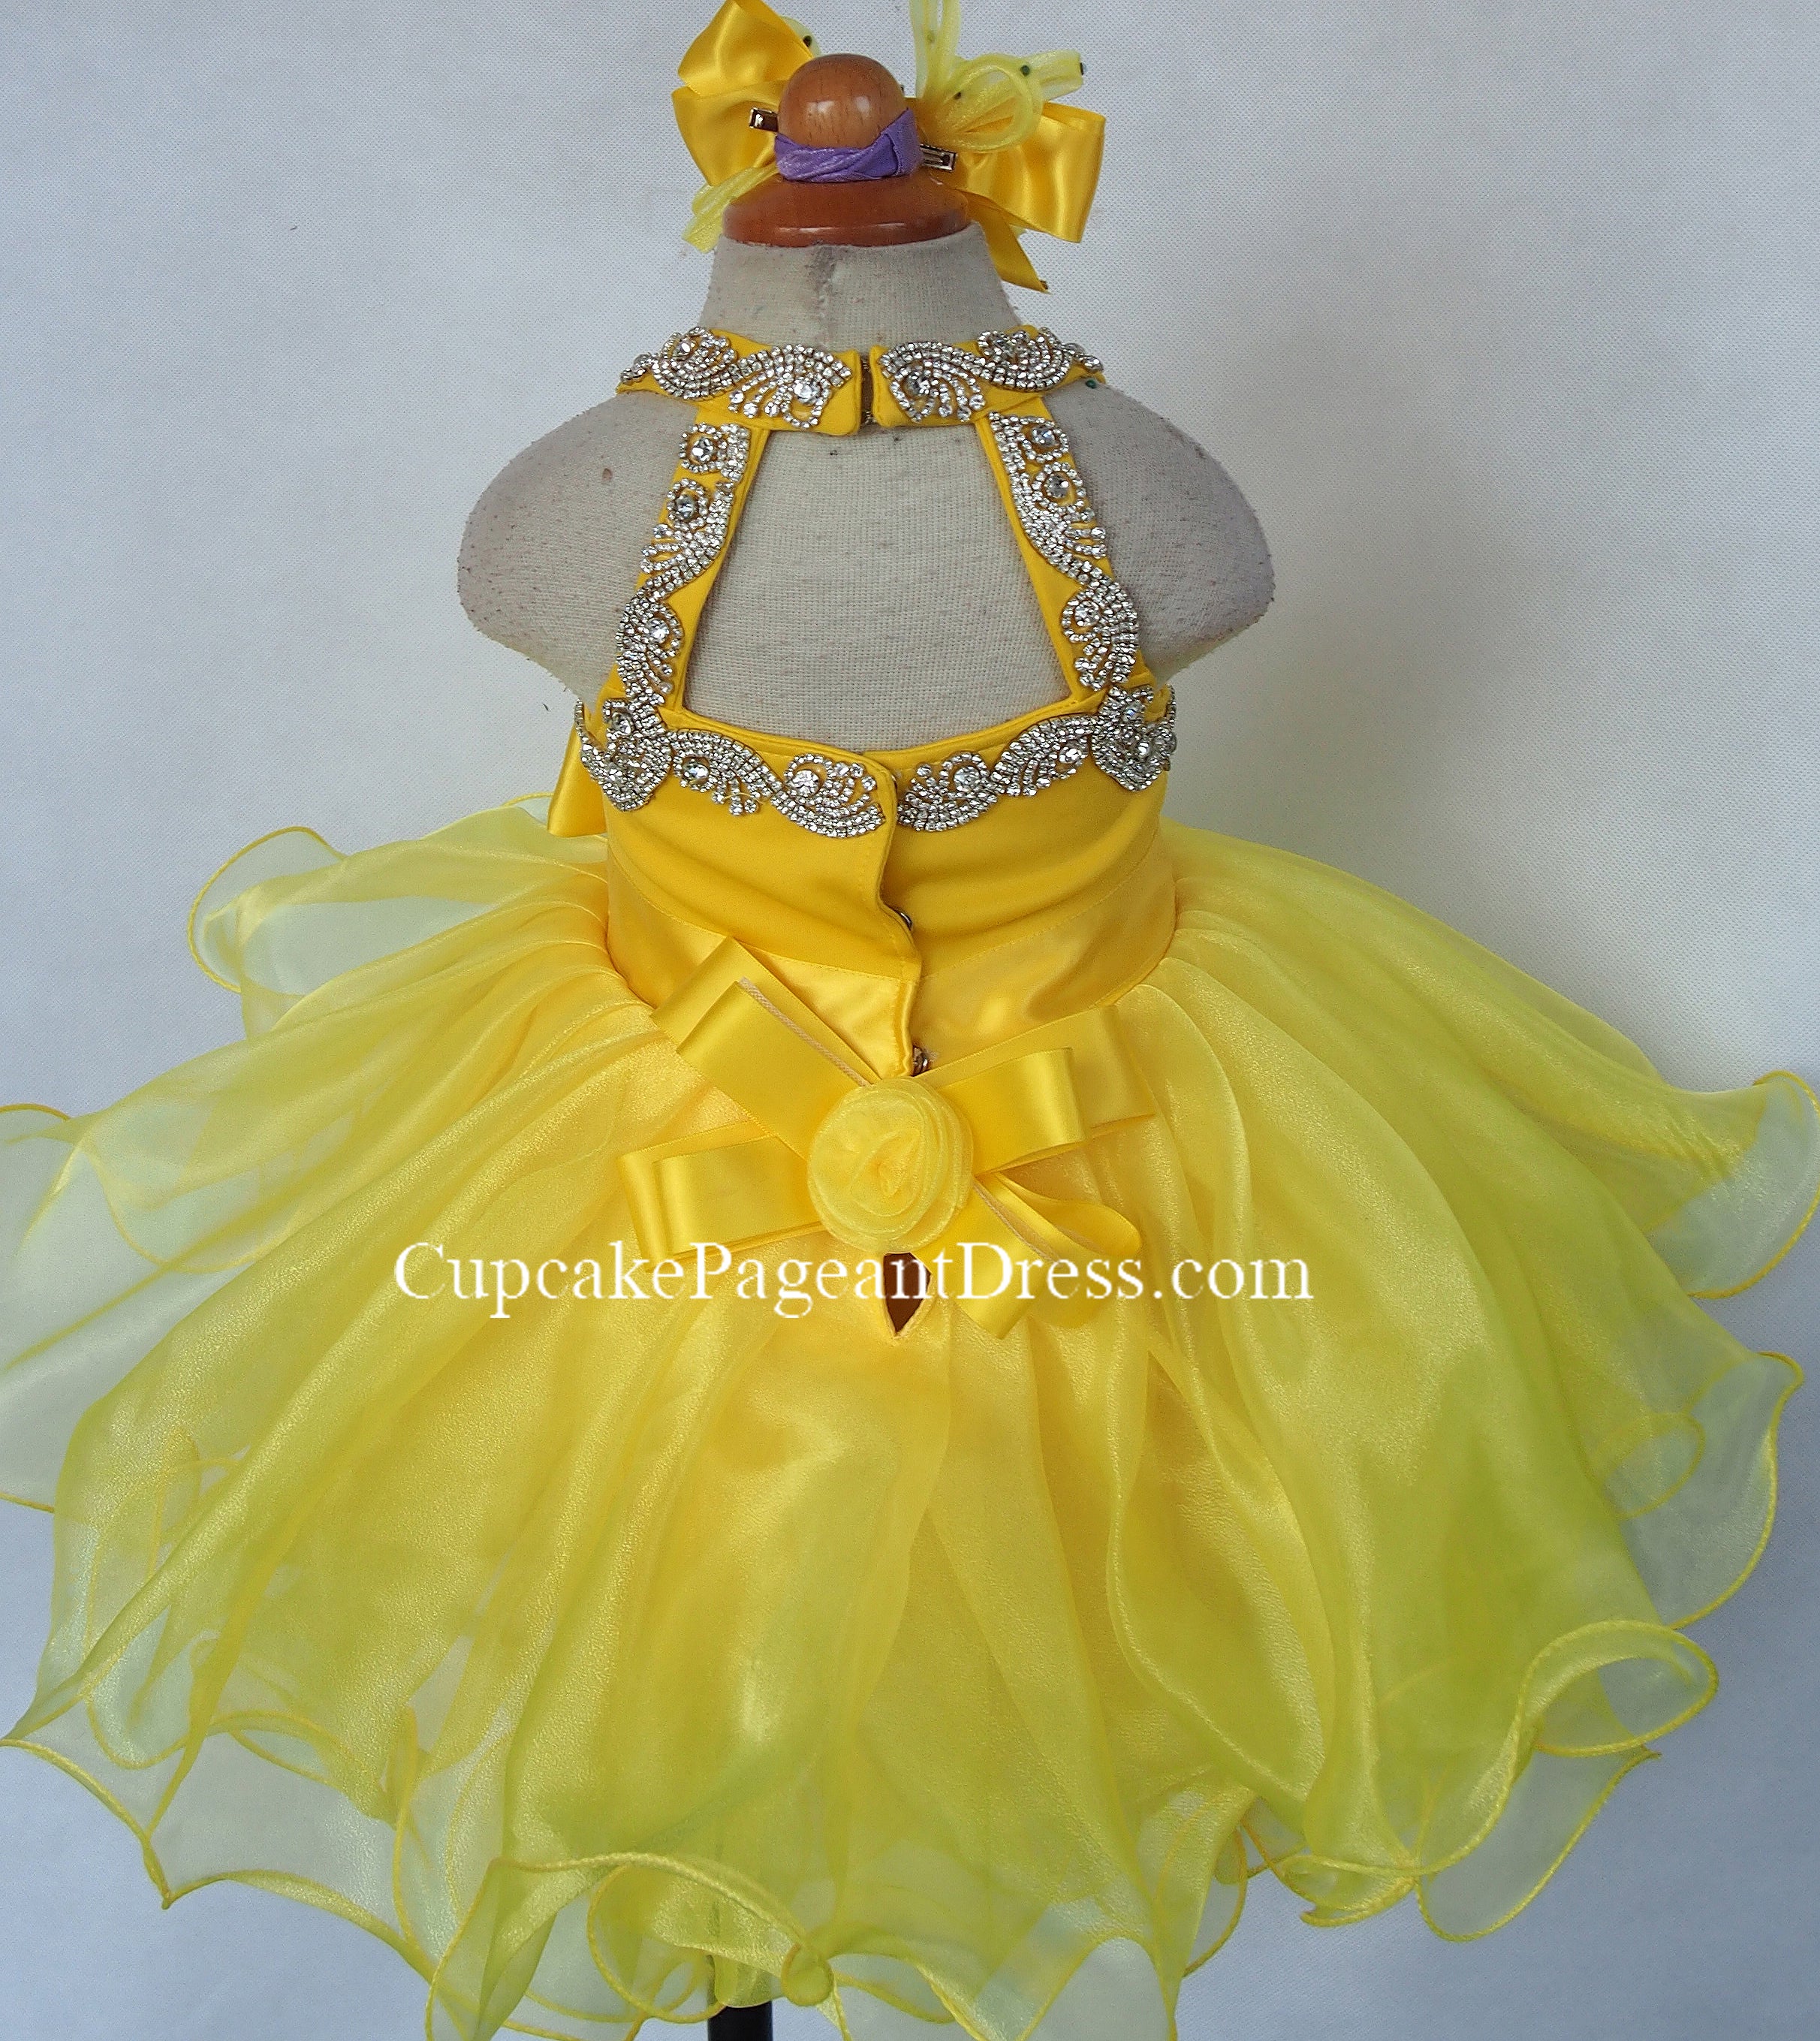 Newborn/Child/Infant/Little Girl/Toddler Baby Doll Pageant Dress - CupcakePageantDress